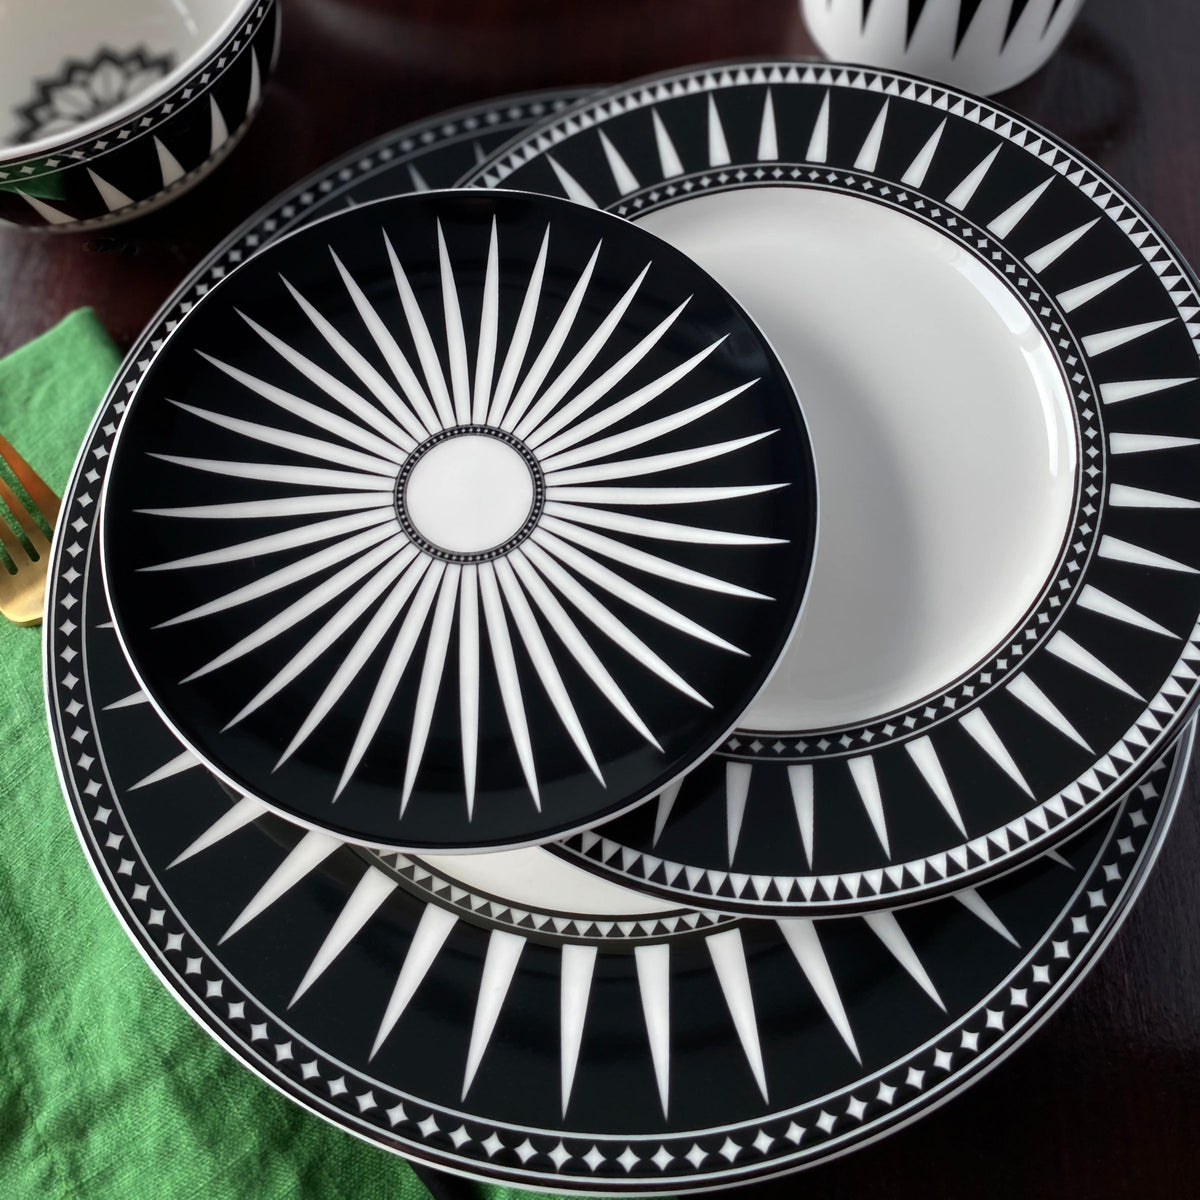 A Marrakech Canapé Plate with a sunburst pattern inspired by Caskata Artisanal Home ceramics.